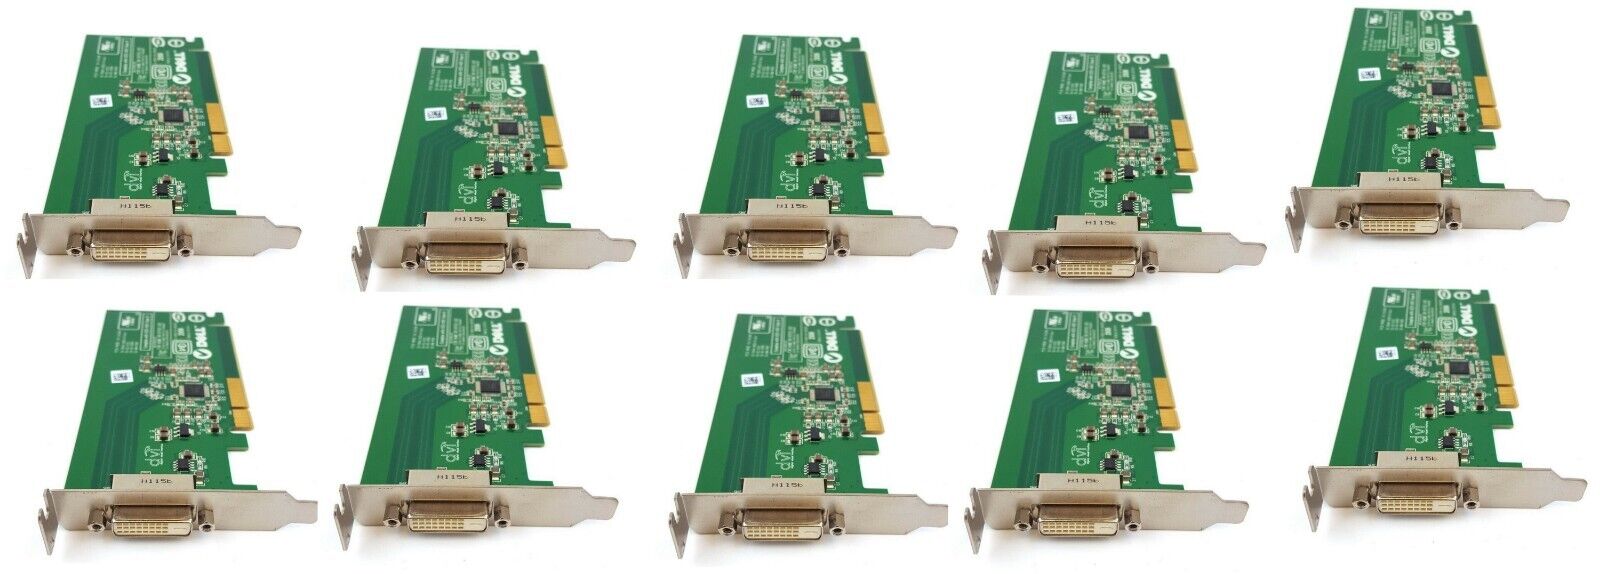 Lot of 10 Dell DVI-D Video Card PCI CN-0FH868 D33724 E-G900-04-2600(B) Low Pro